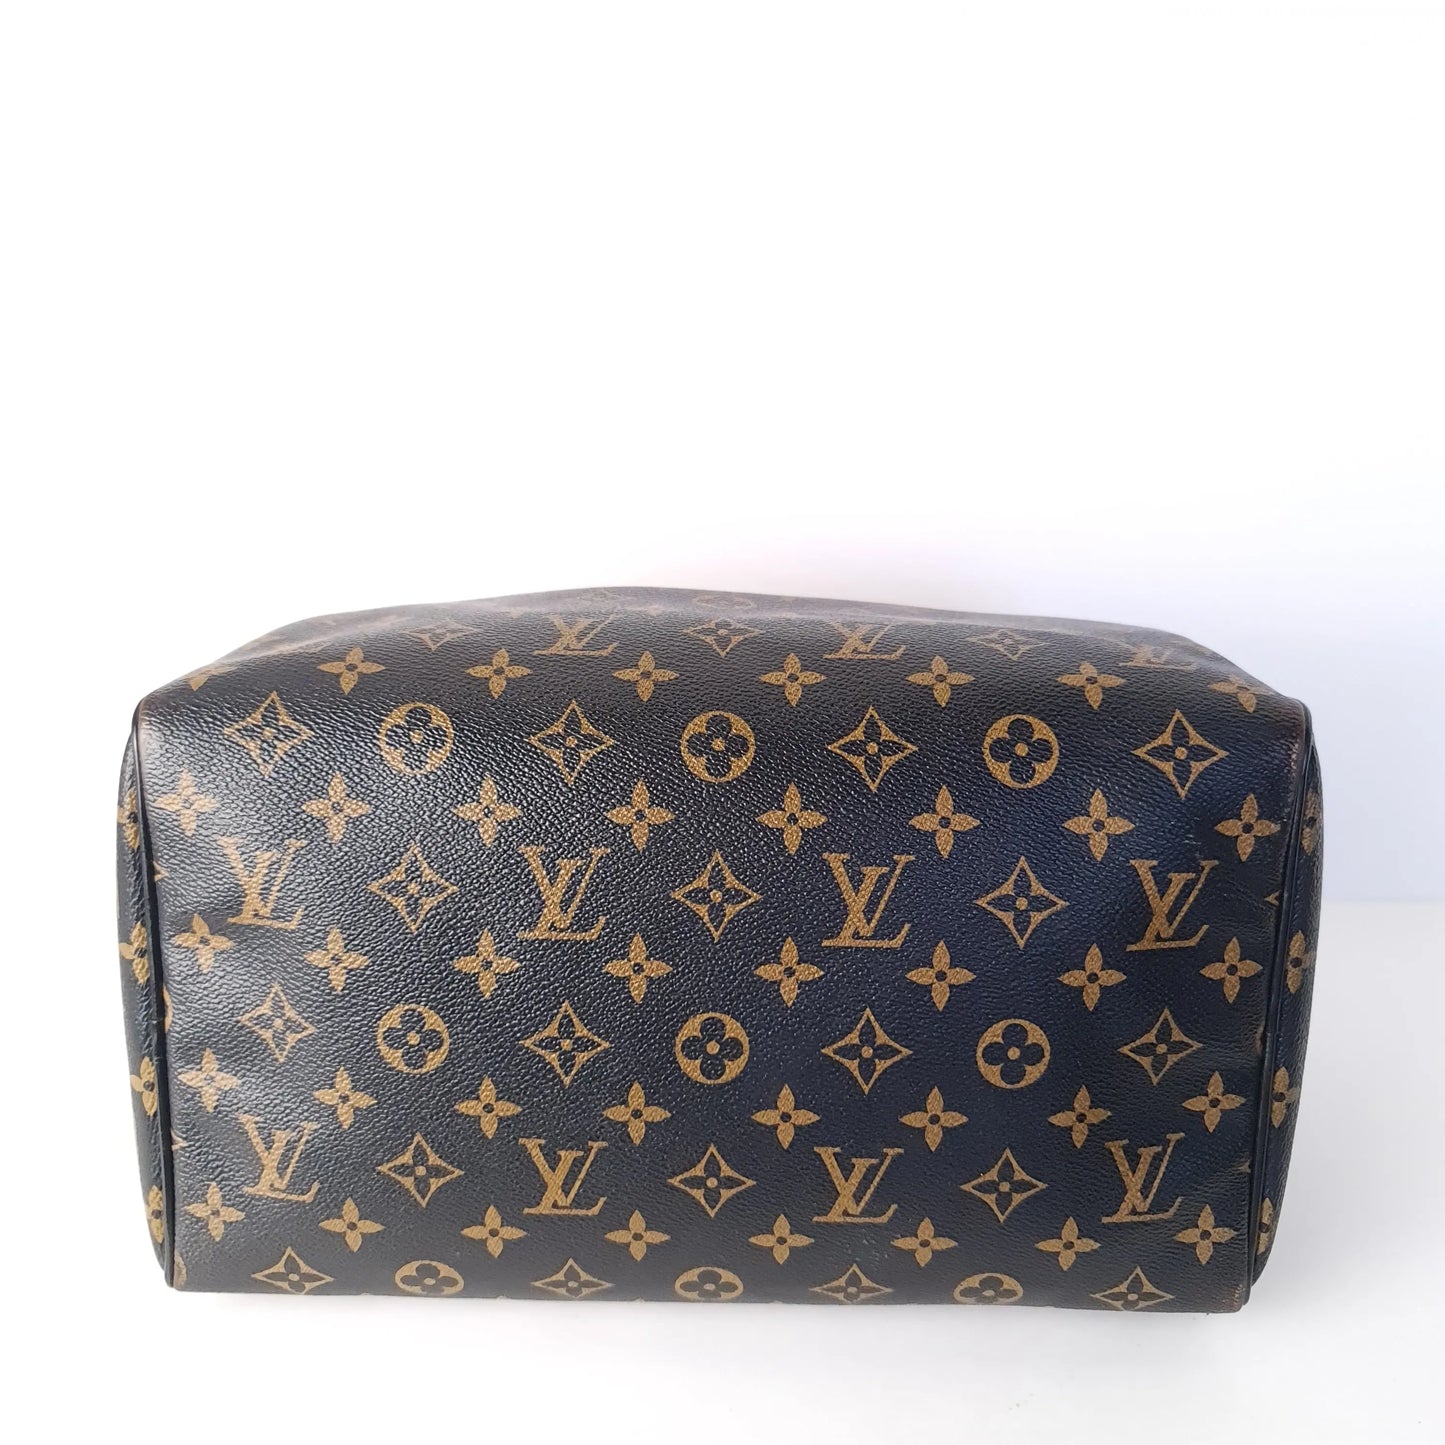 Load image into Gallery viewer, Louis Vuitton Louis Vuitton Limited Edition Speedy 30 Mirage Noir Handbag LVBagaholic
